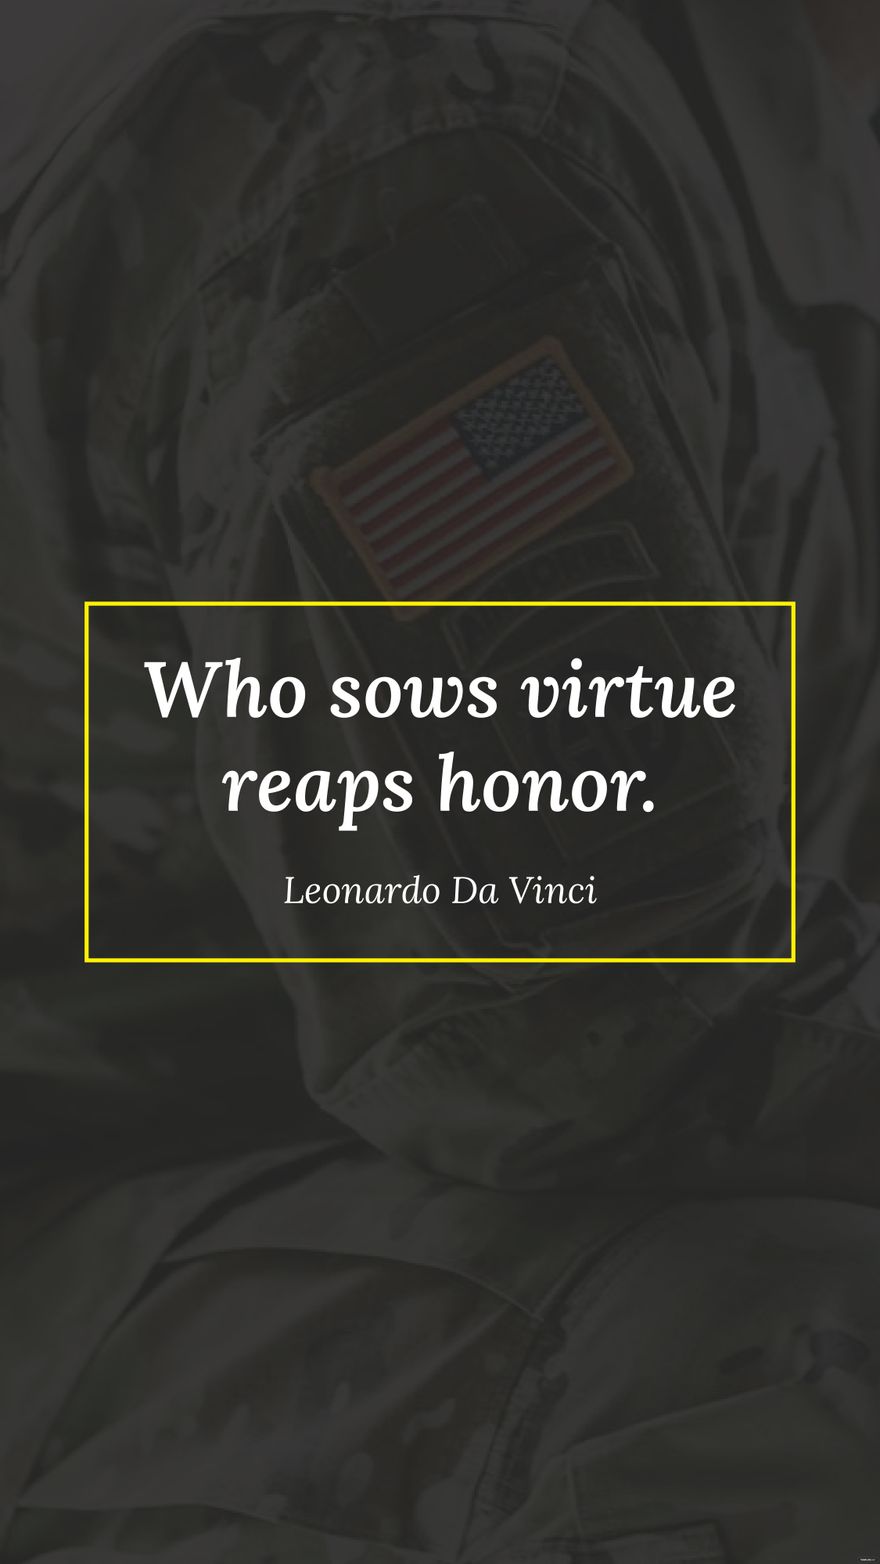 Leonardo da Vinci - Who sows virtue reaps honor. in JPG